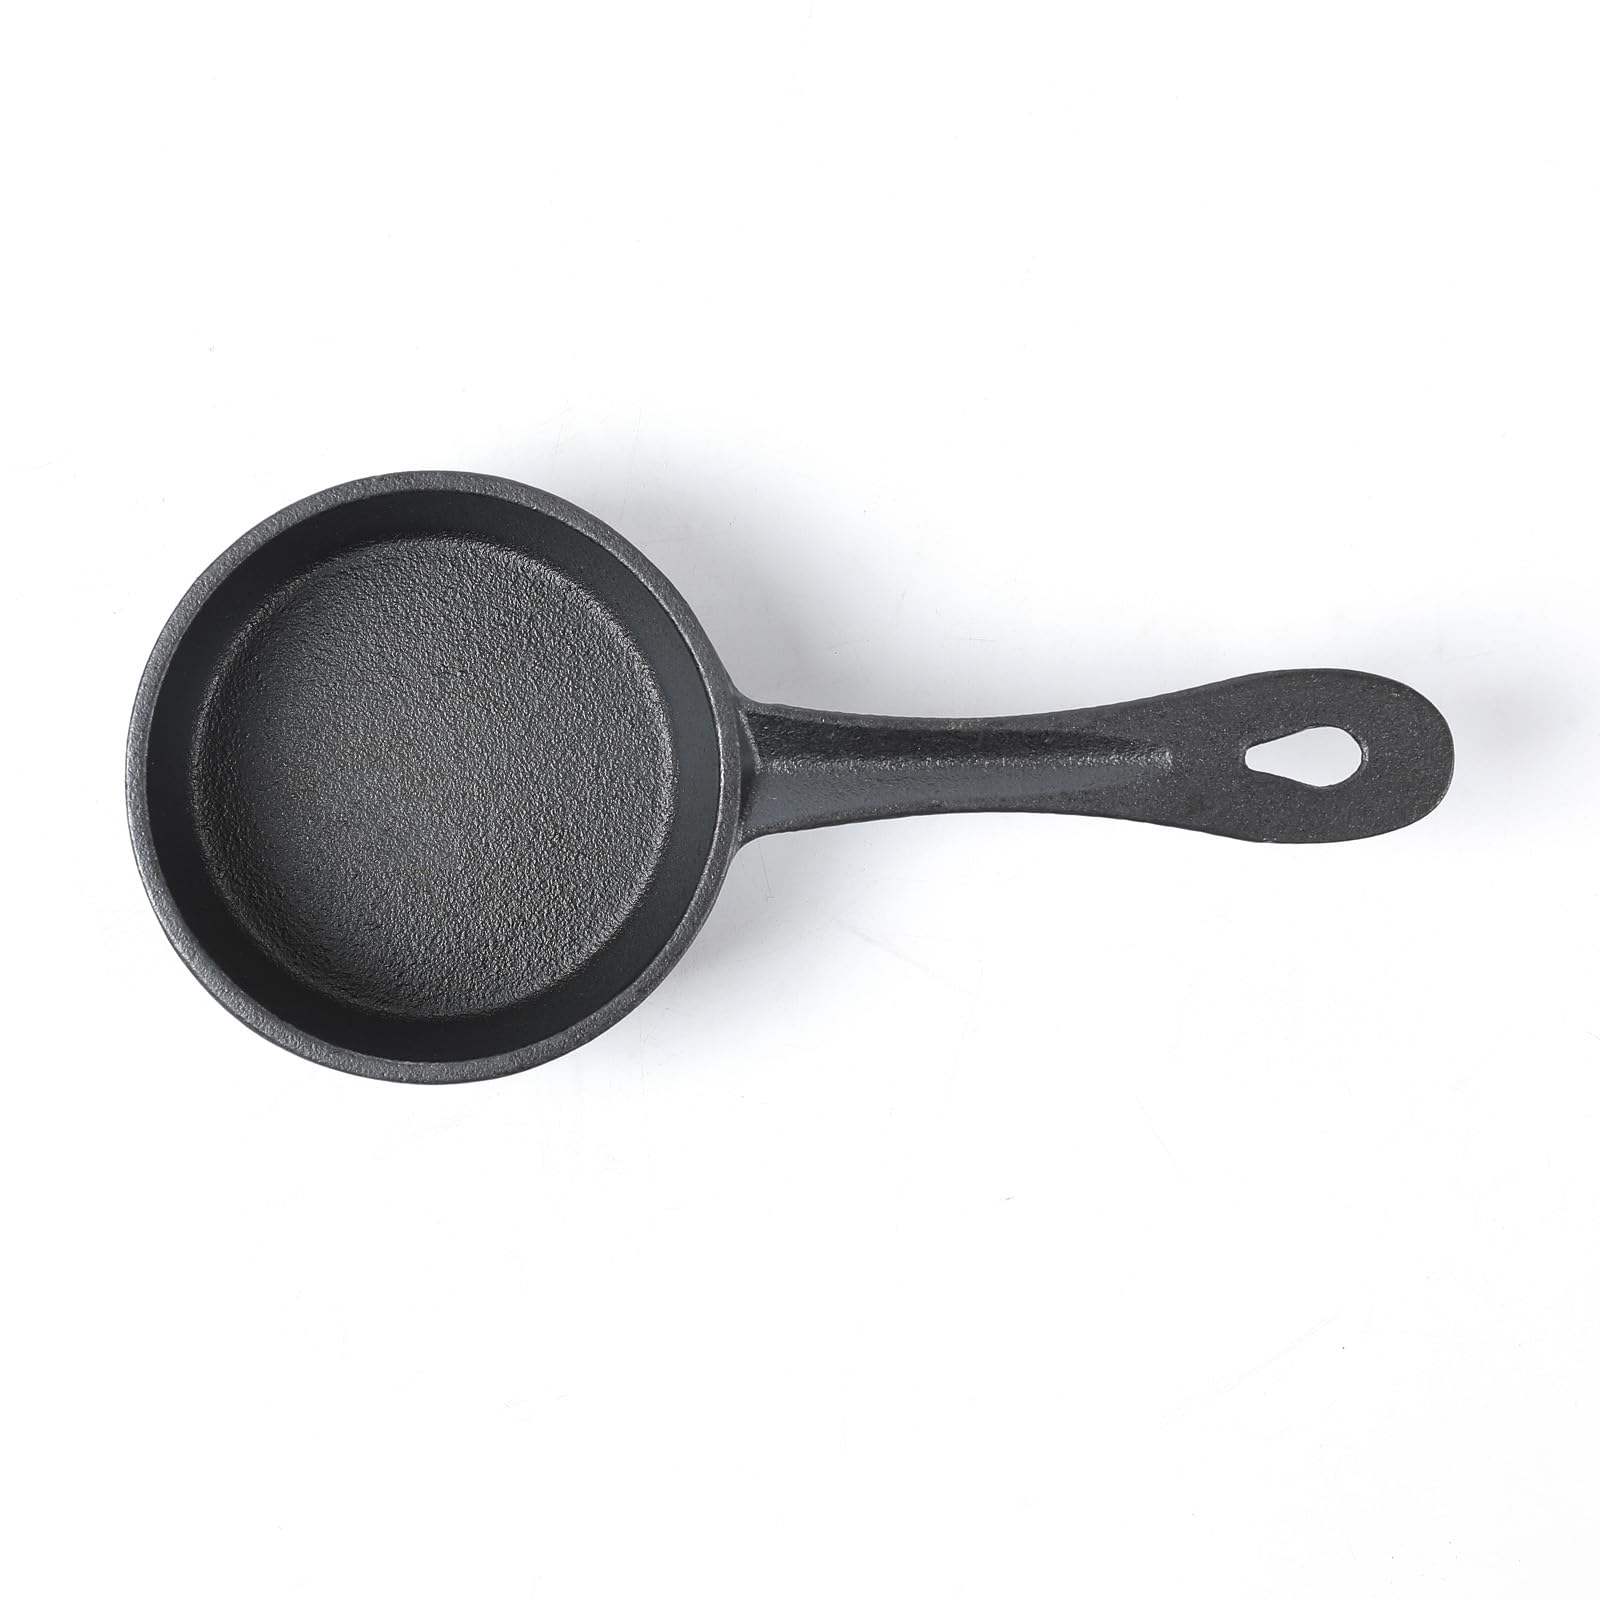 HAWOK DIA.3.8inch Cast Iron Melting Pot Pre-Seasoned Sauce Pan…